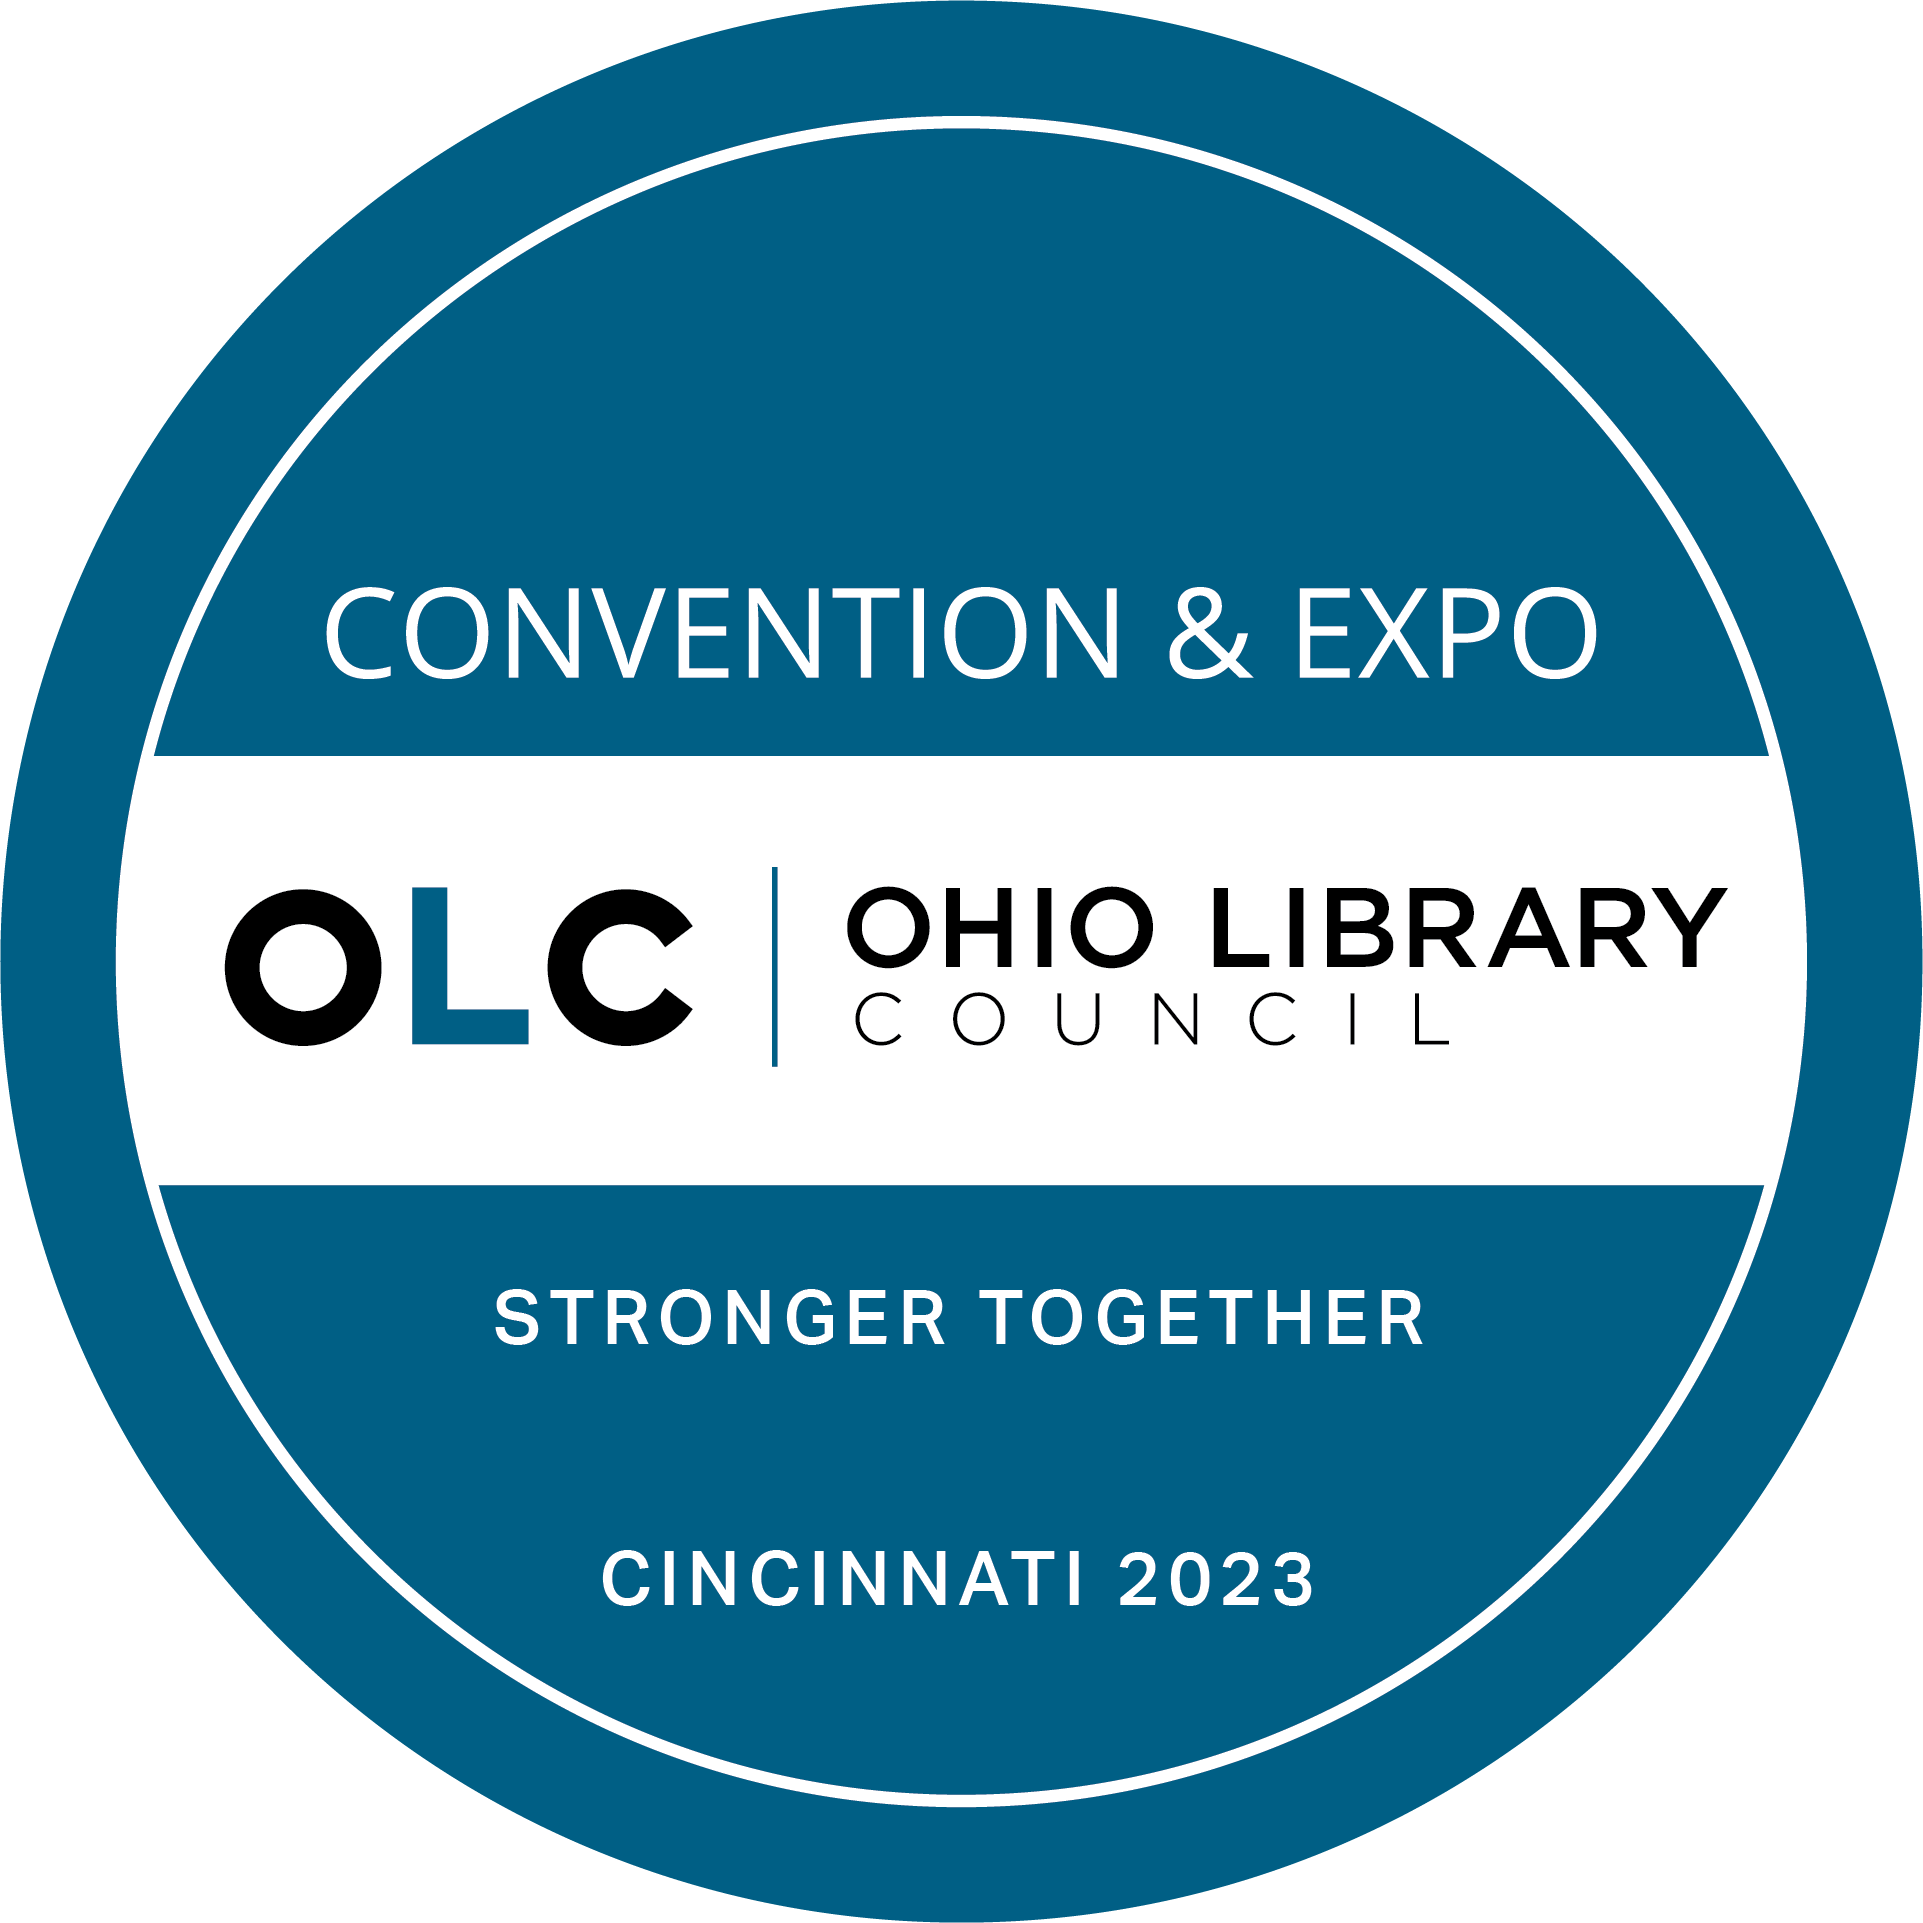 Stronger Together Convention logo